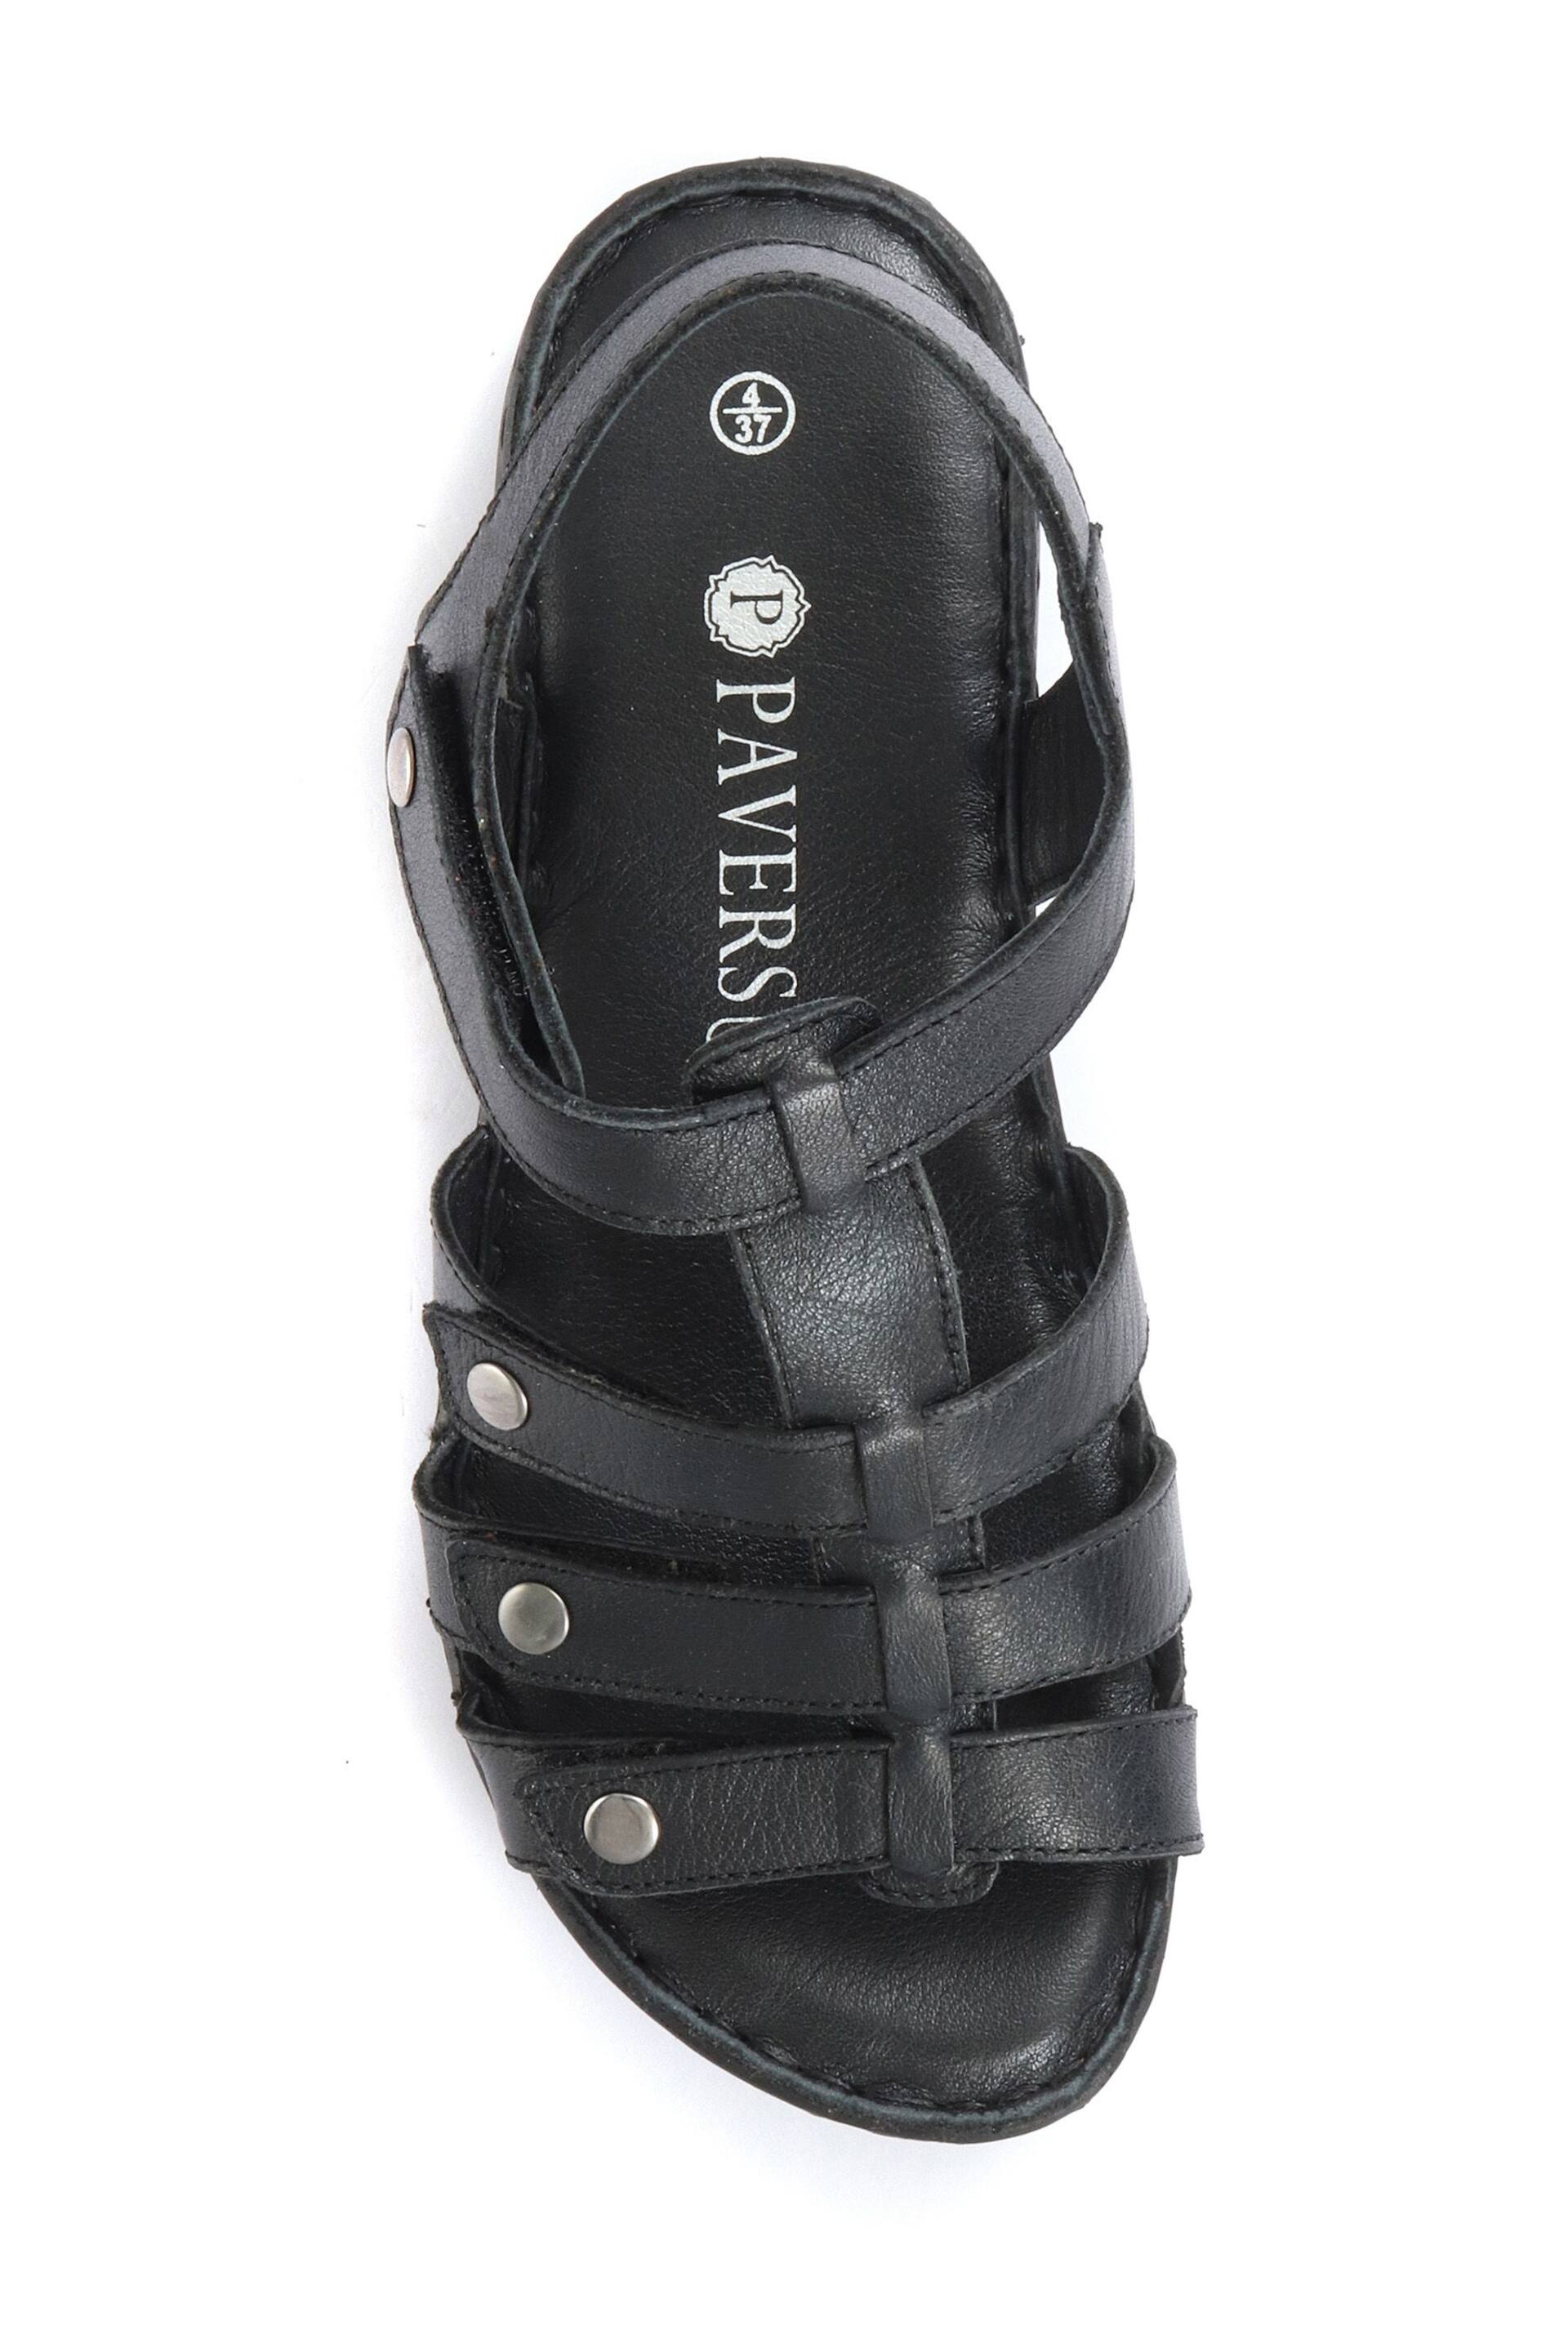 Pavers Black Ladies Leather T-Bar Sandals - Image 4 of 5